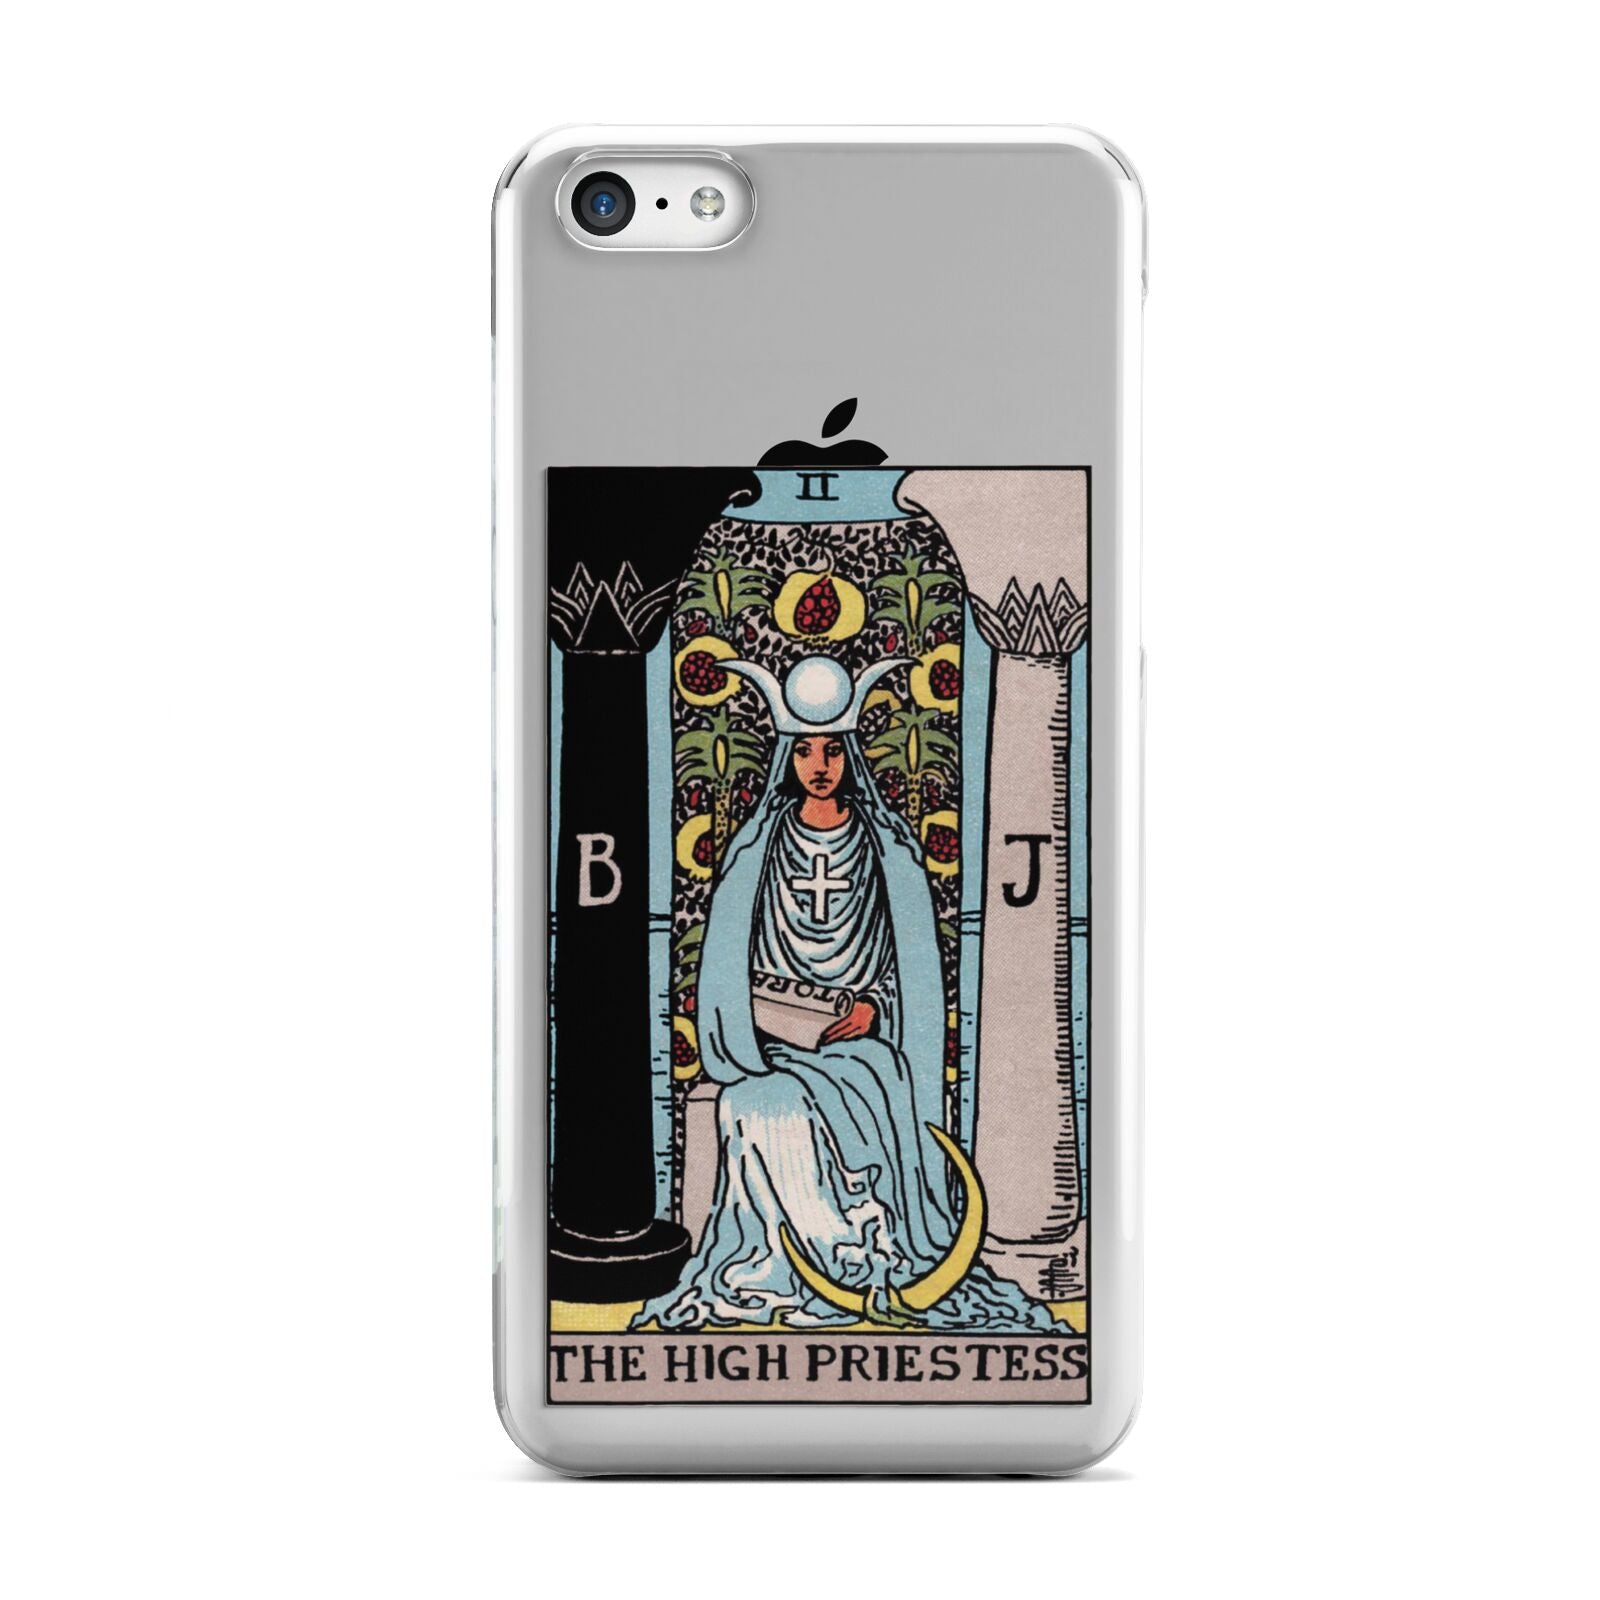 The High Priestess Tarot Card Apple iPhone 5c Case